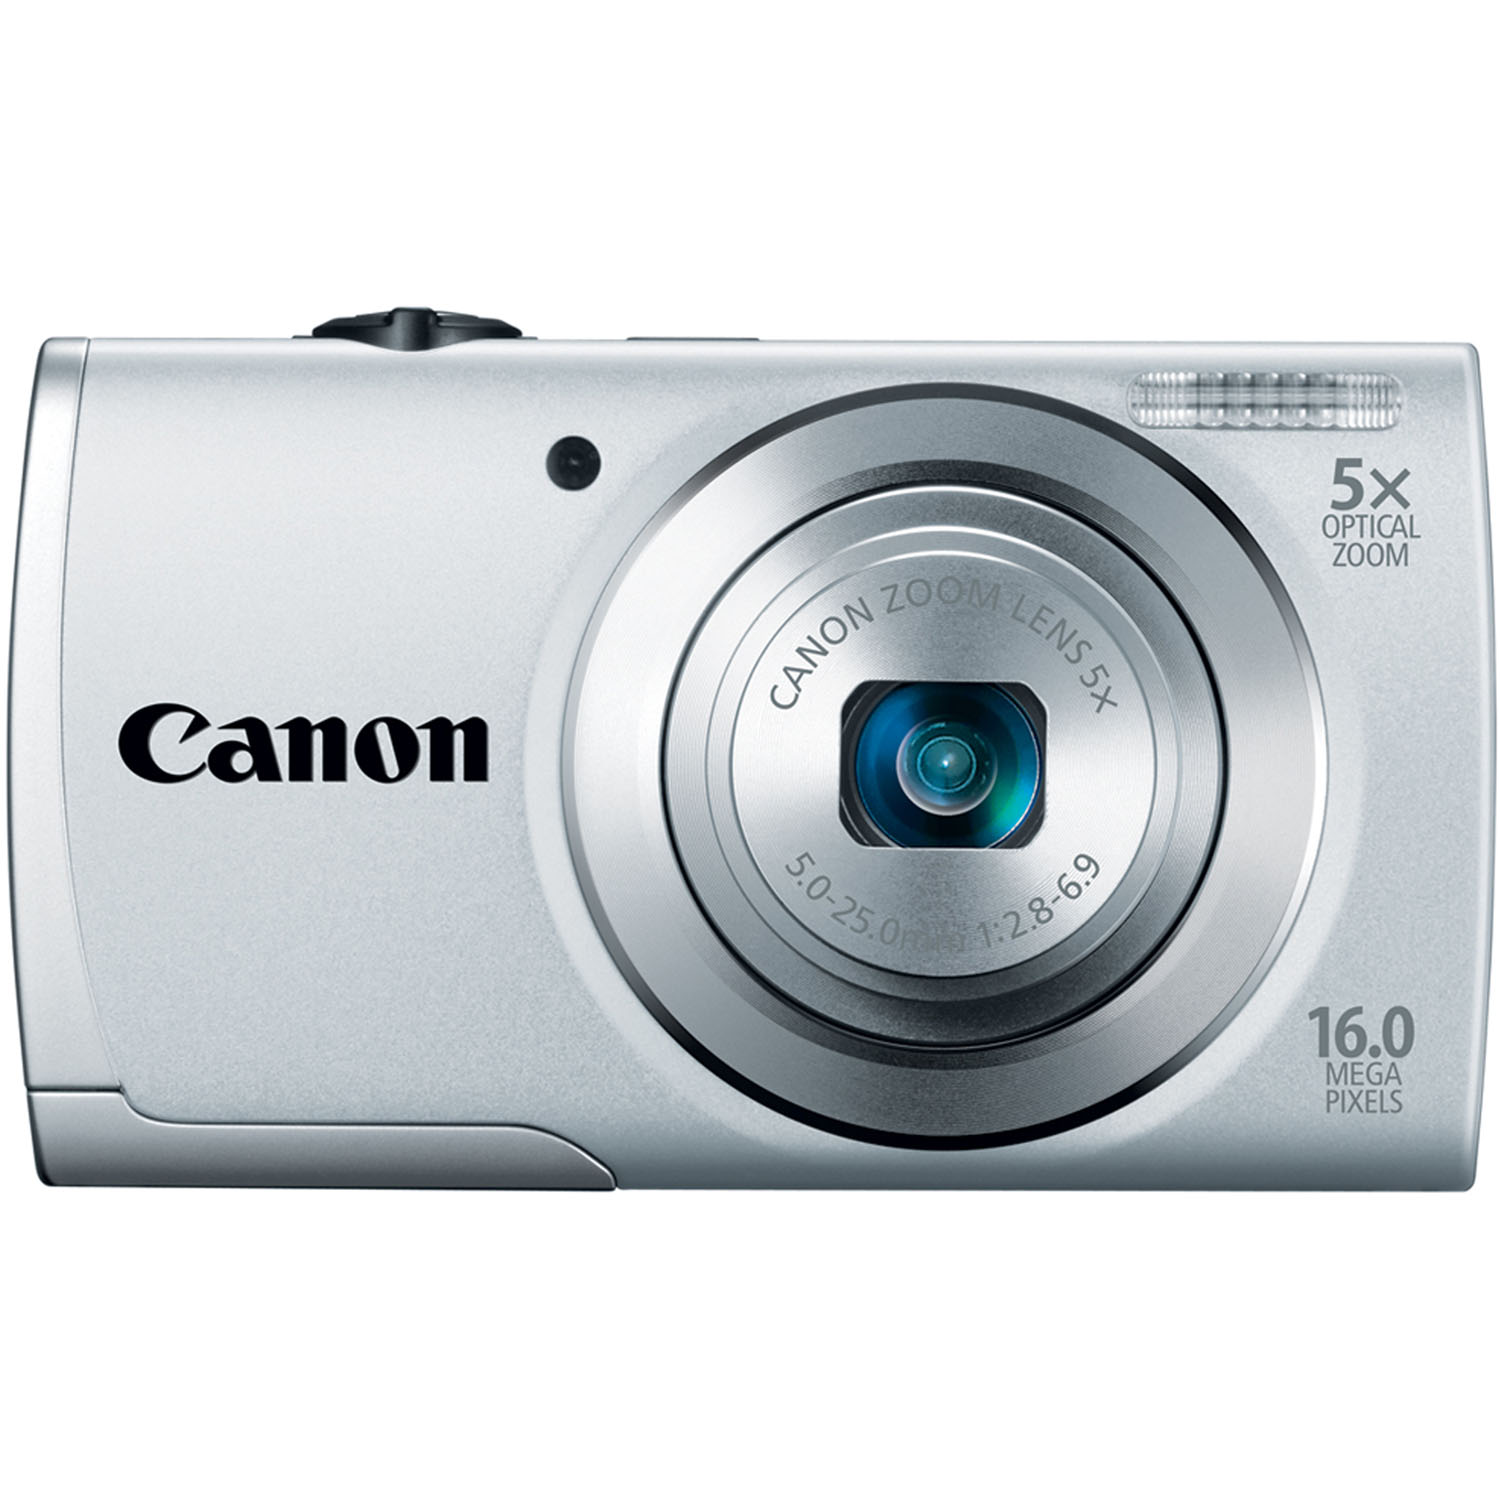 Canon 16.0-Megapixel PowerShot A2500 Digital Camera - Silver Silver/gray 1/2.3